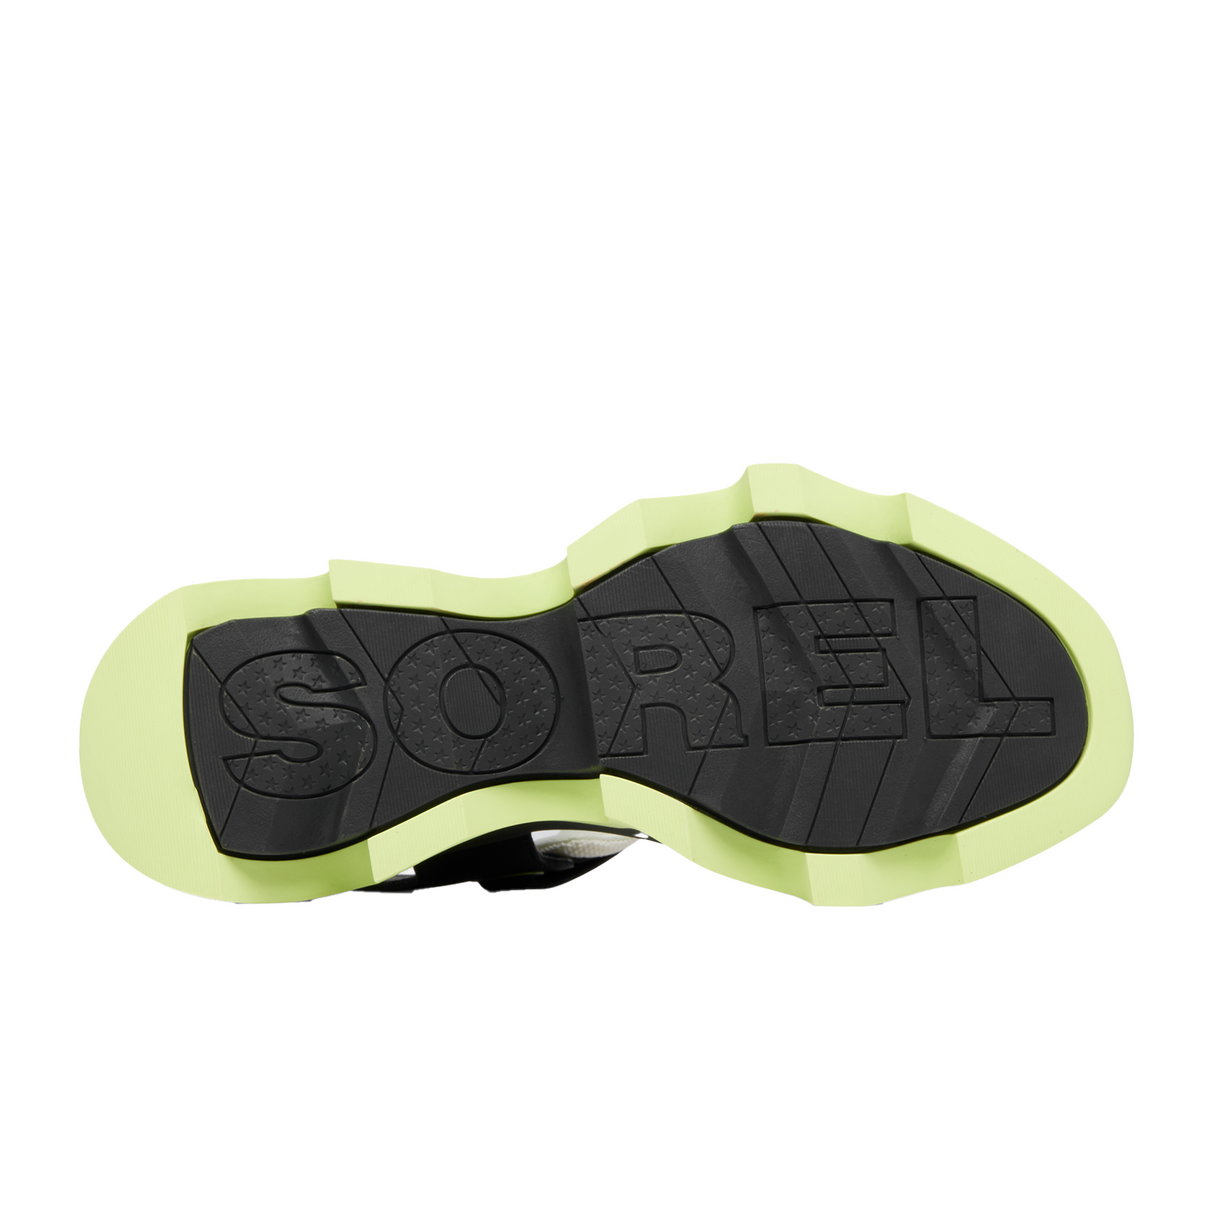 Sorel Kinetic Impact Y-Strap High Sandal (Women) - Black/Jet Sandals - Heel/Wedge - The Heel Shoe Fitters